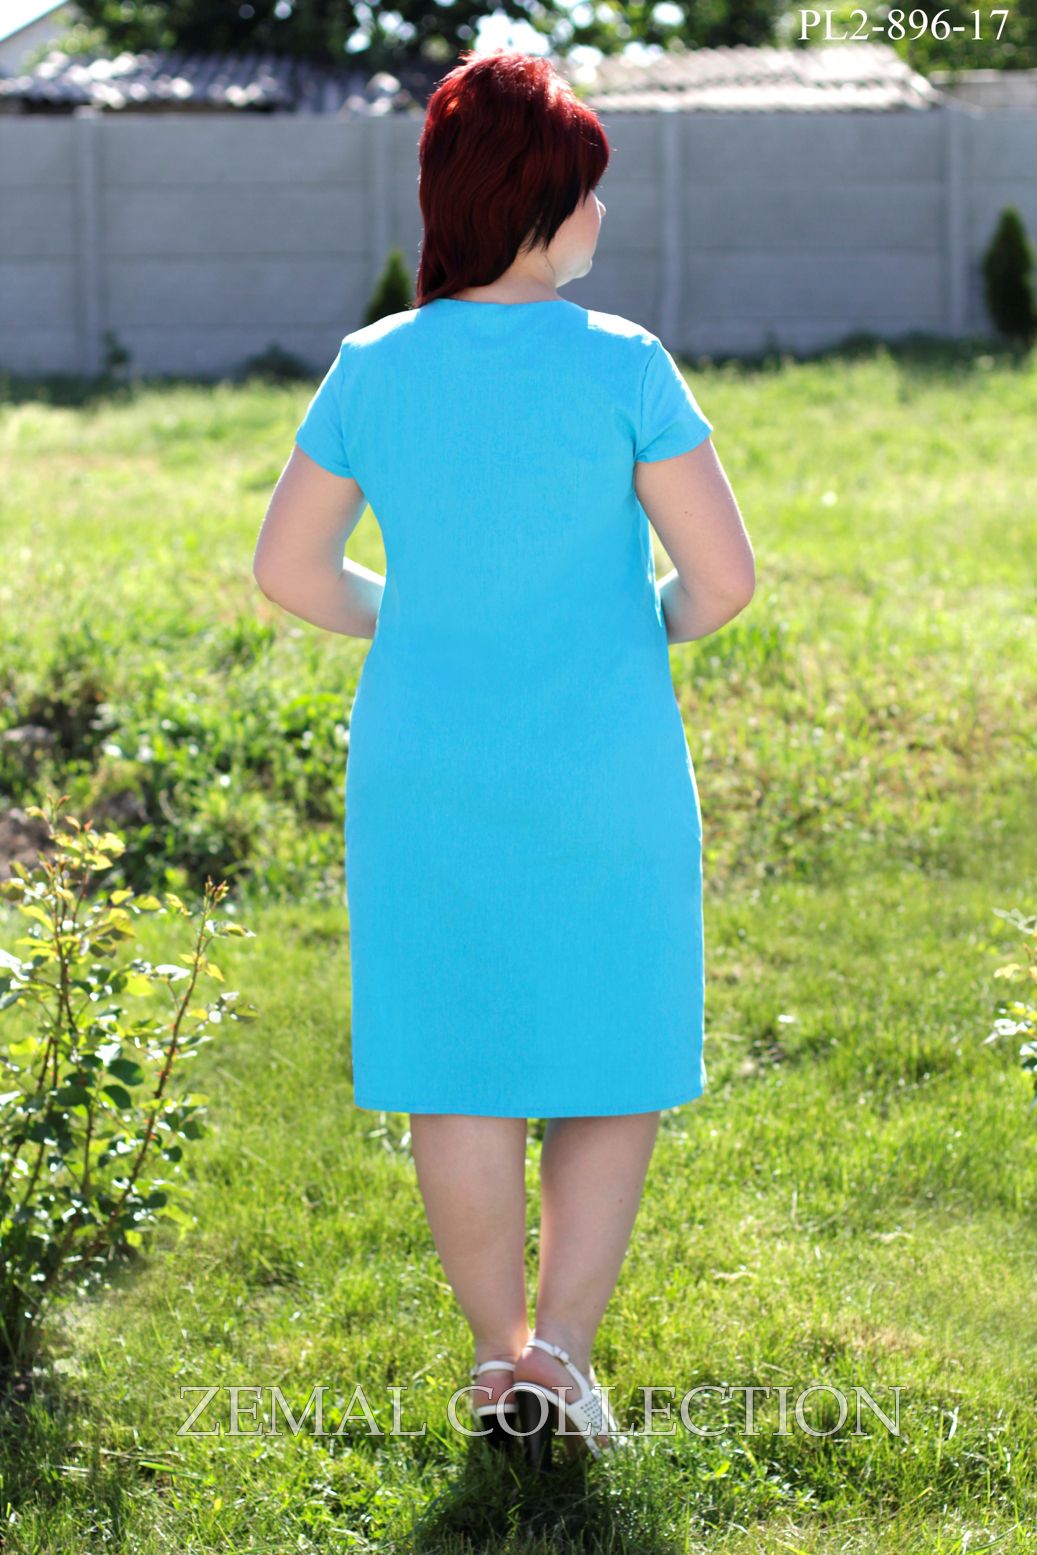 Сукня pl2-896 купить на сайте производителя